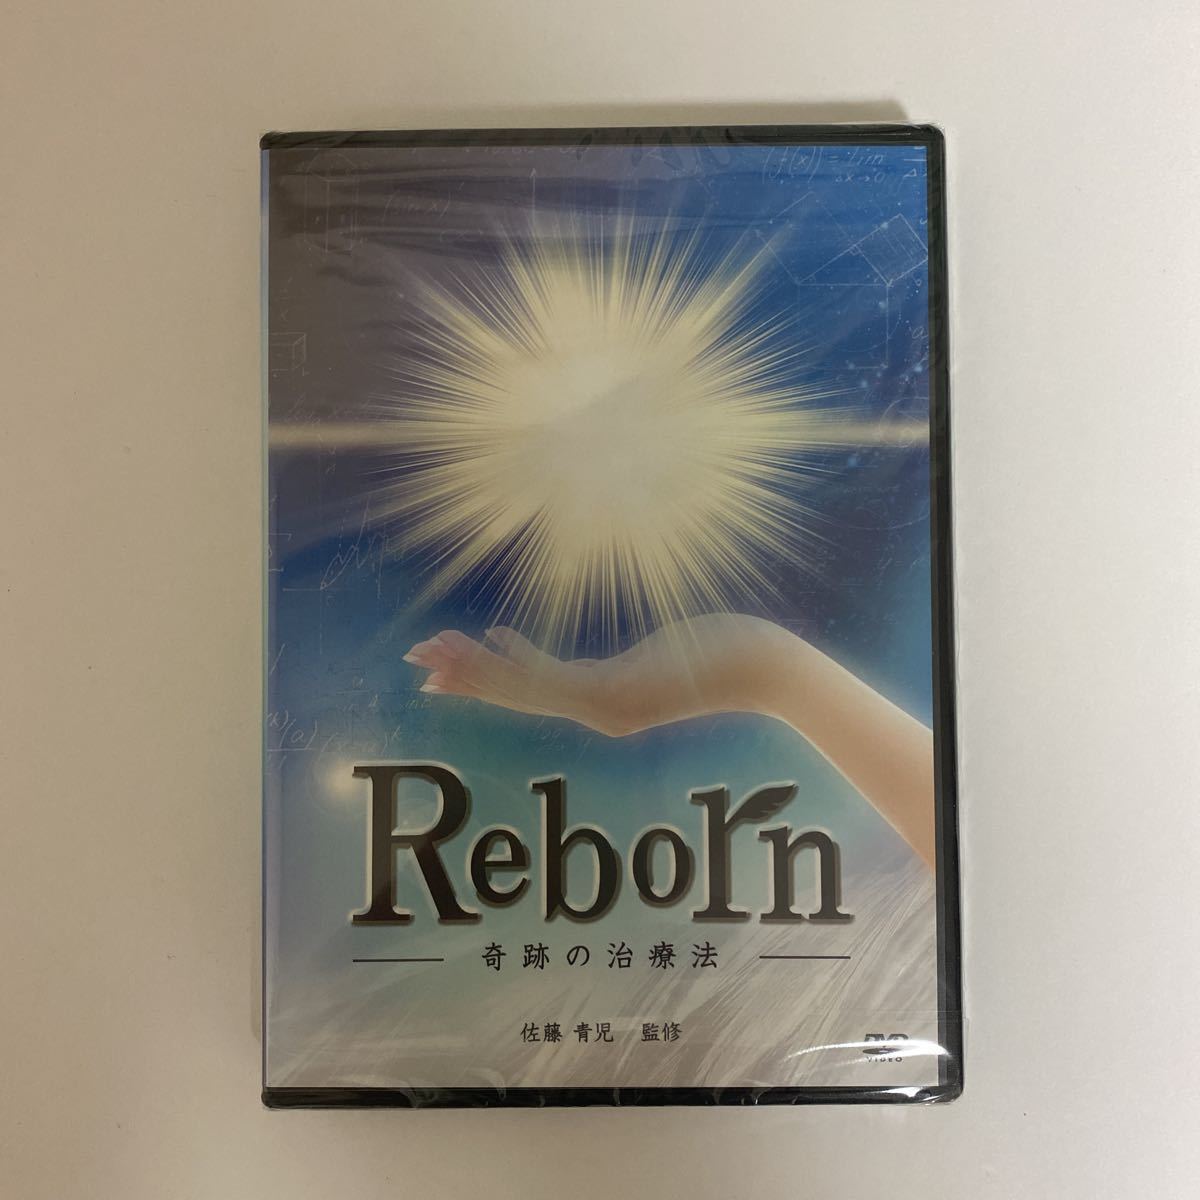 佐藤青児 Reborn-奇跡の治療法-